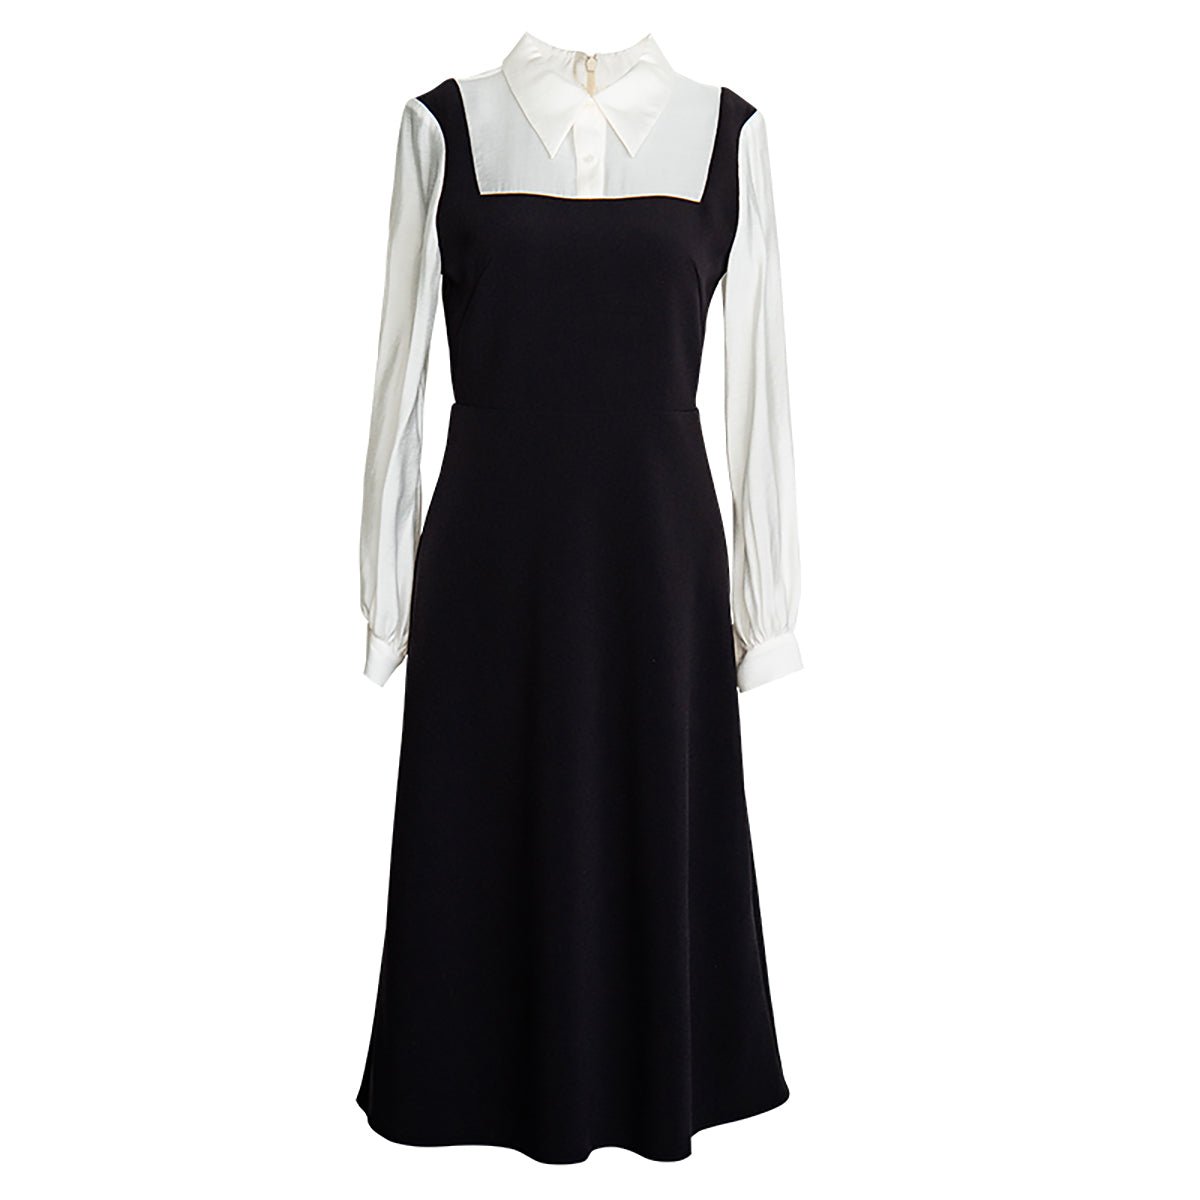 A-line Black Dress with Square Neck - 0cm